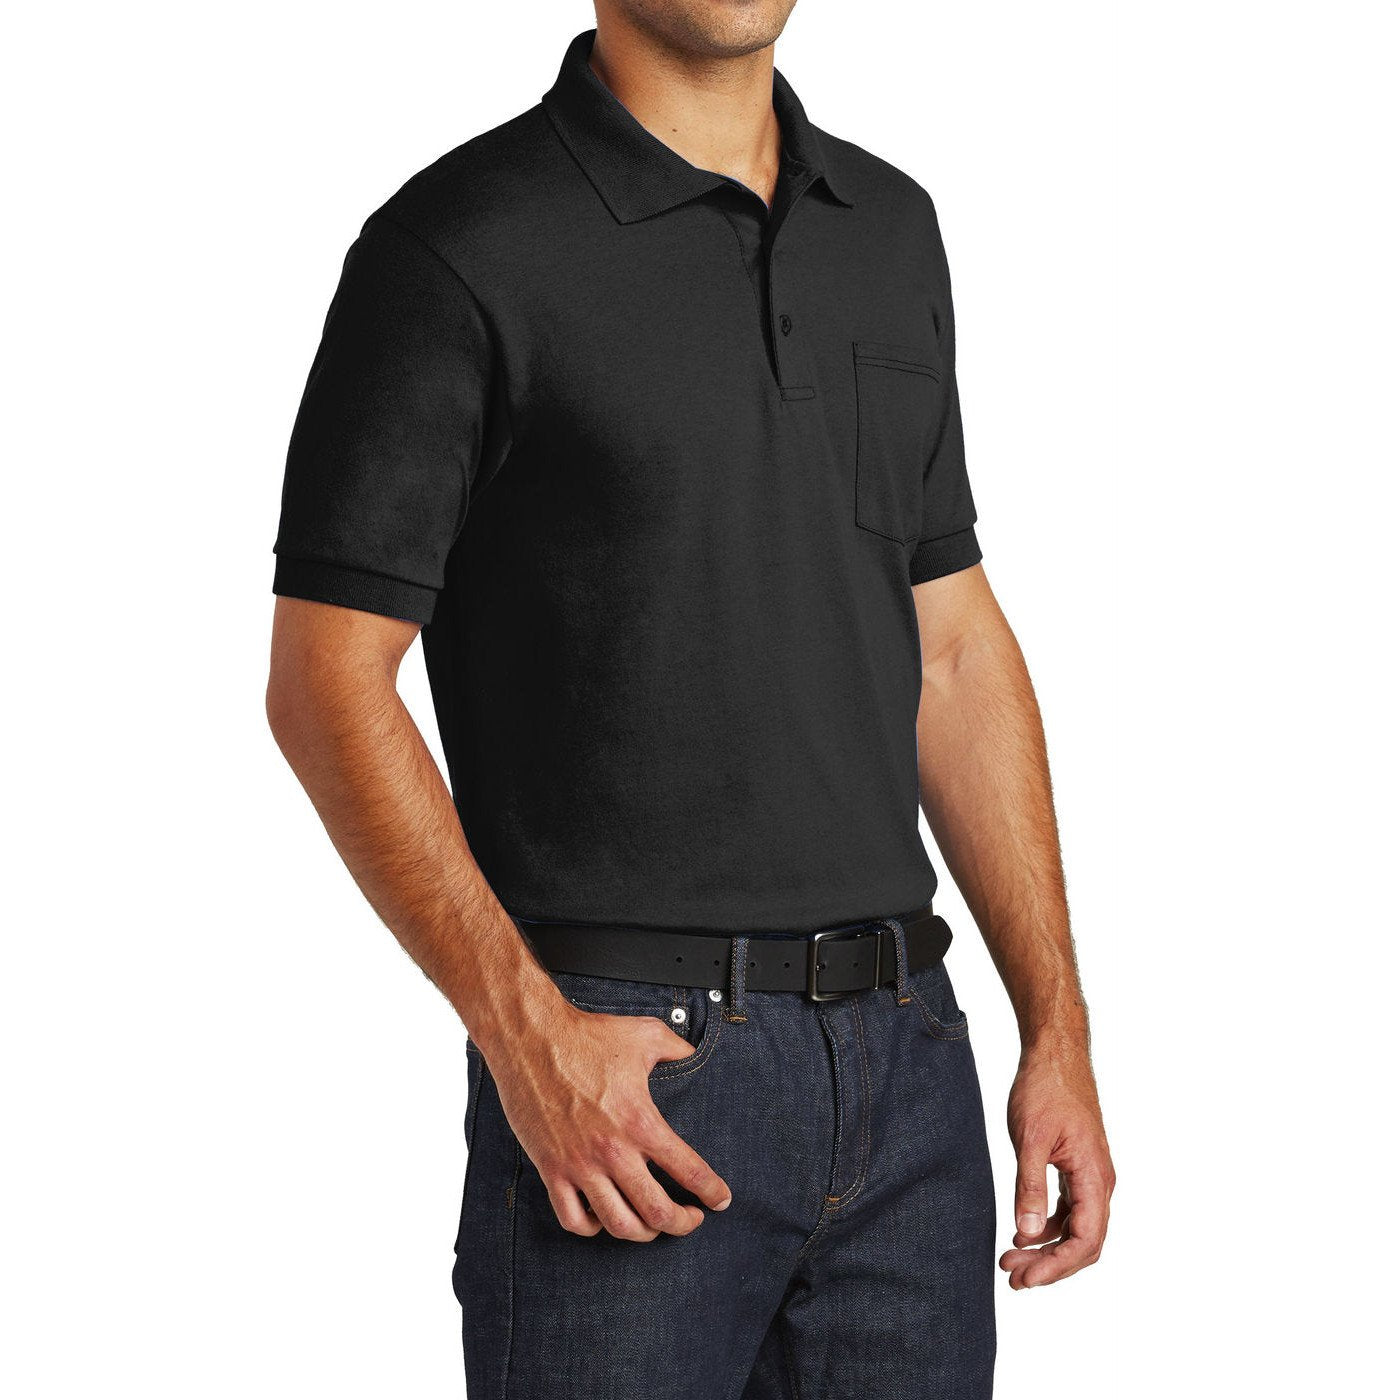 Mafoose Men's Core Blend Jersey Knit Pocket Polo Shirt Jet Black